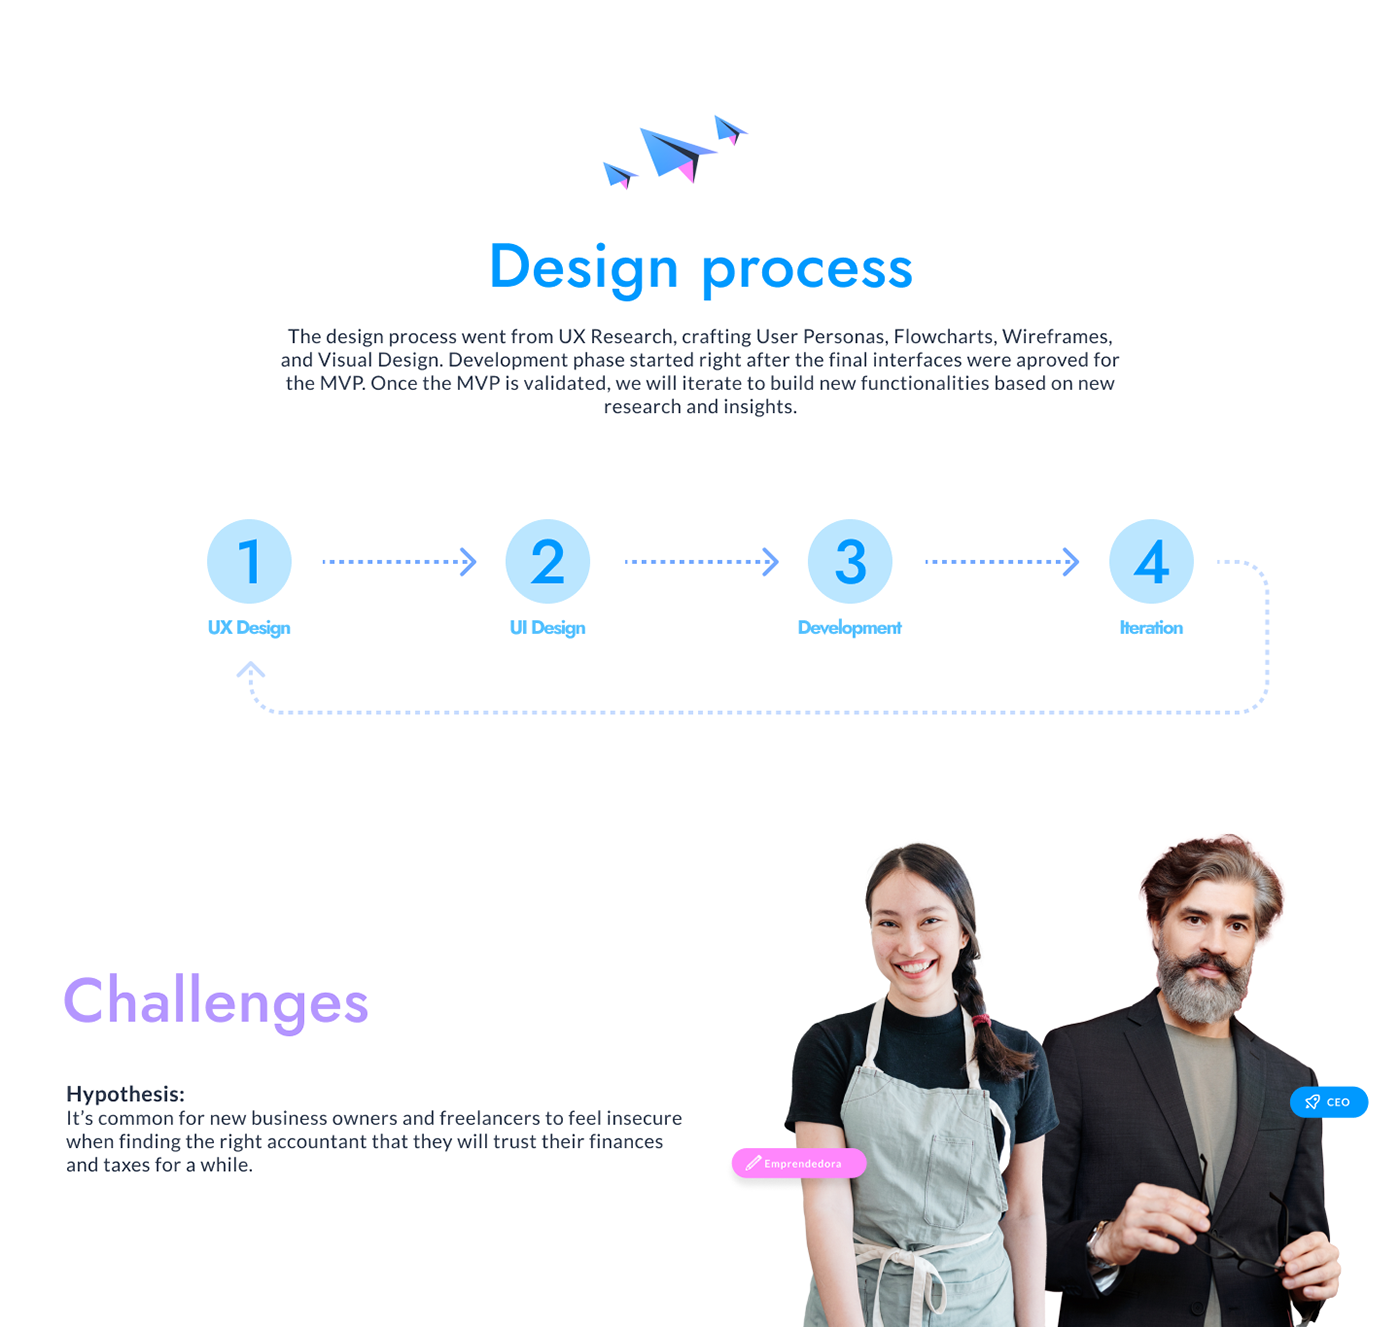 design process, ux design, ui design, development and ideation